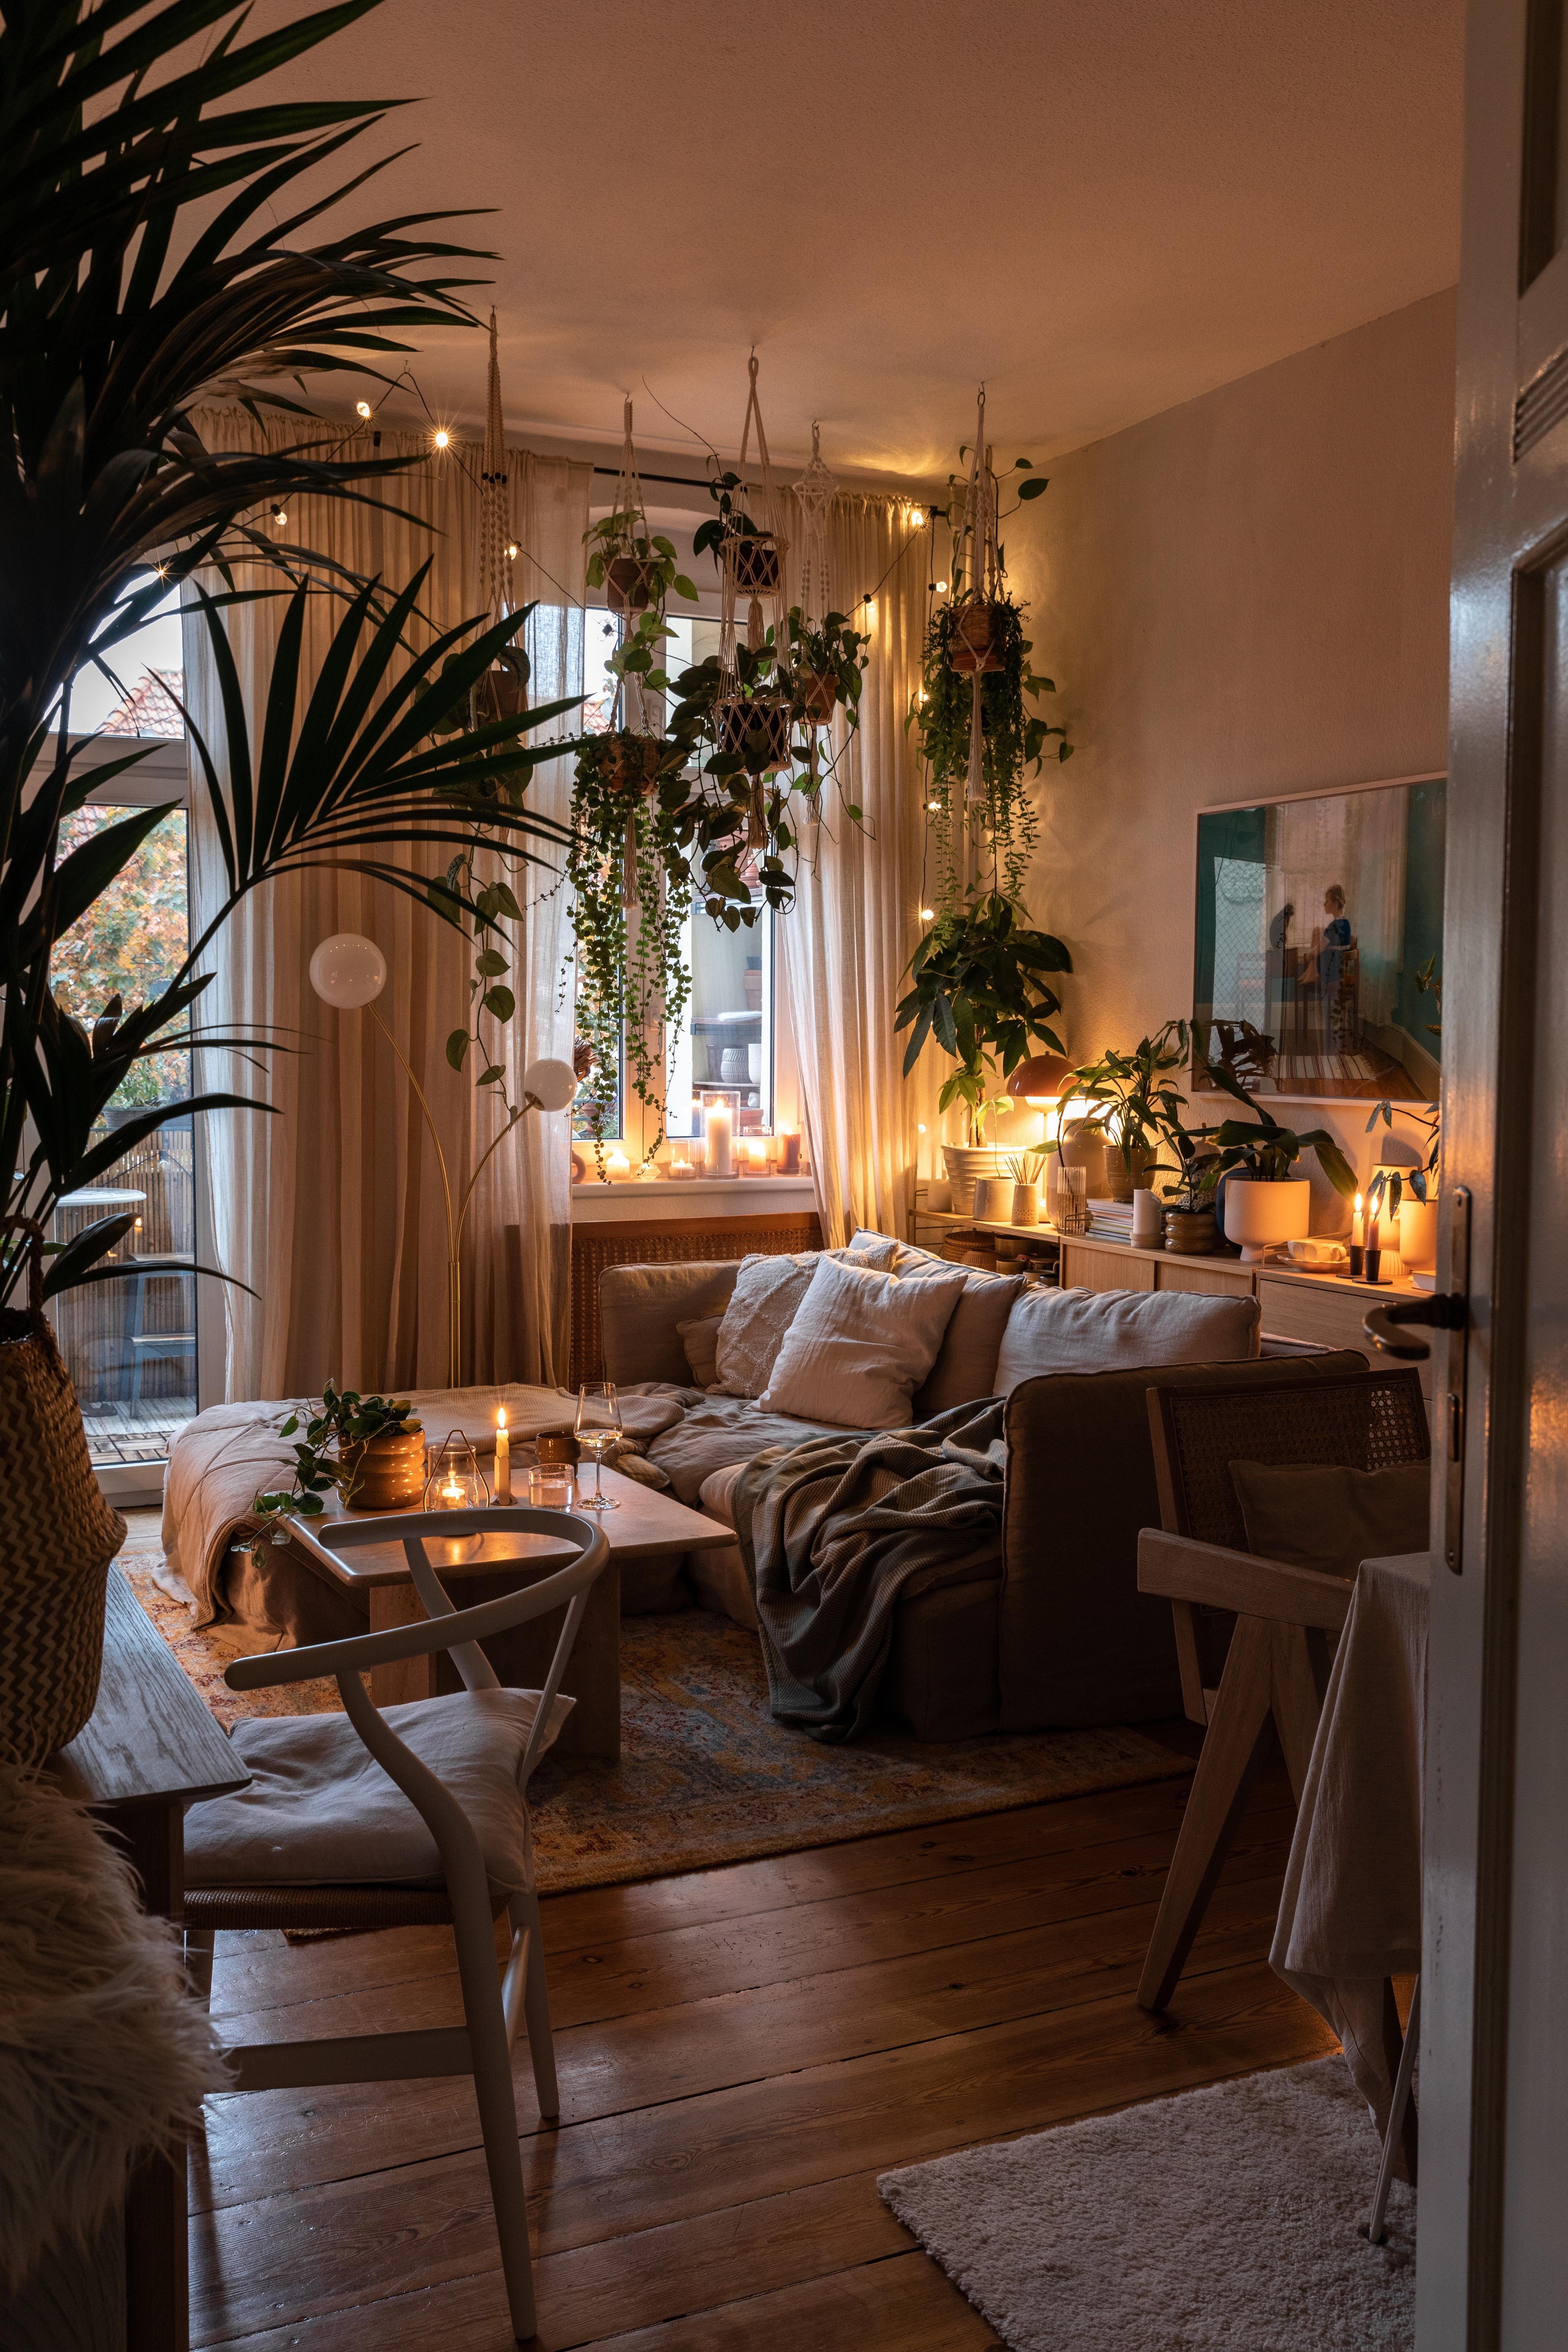 my cozy #livingroom #eveningvibes #candlelight #wohnzimmer #livingroomdecor #cozyhome #home #altbau #einrichtung #cozy